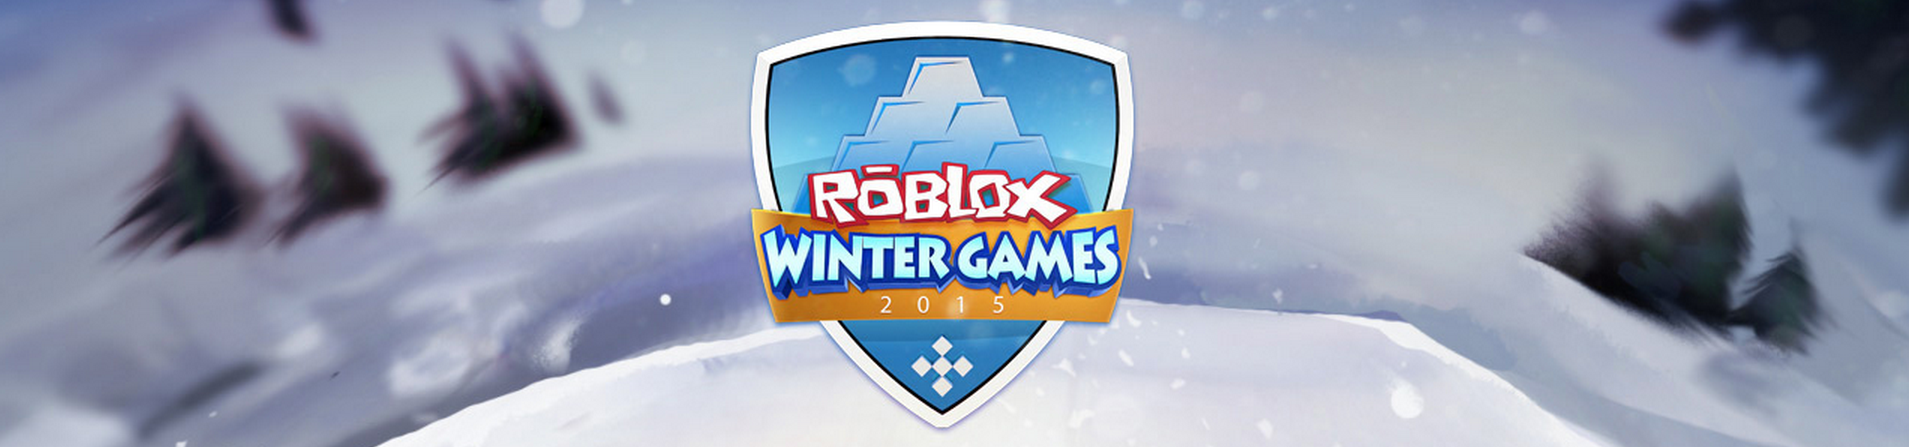 Winter Games 2015 Roblox Wikia Fandom - roblox holiday games